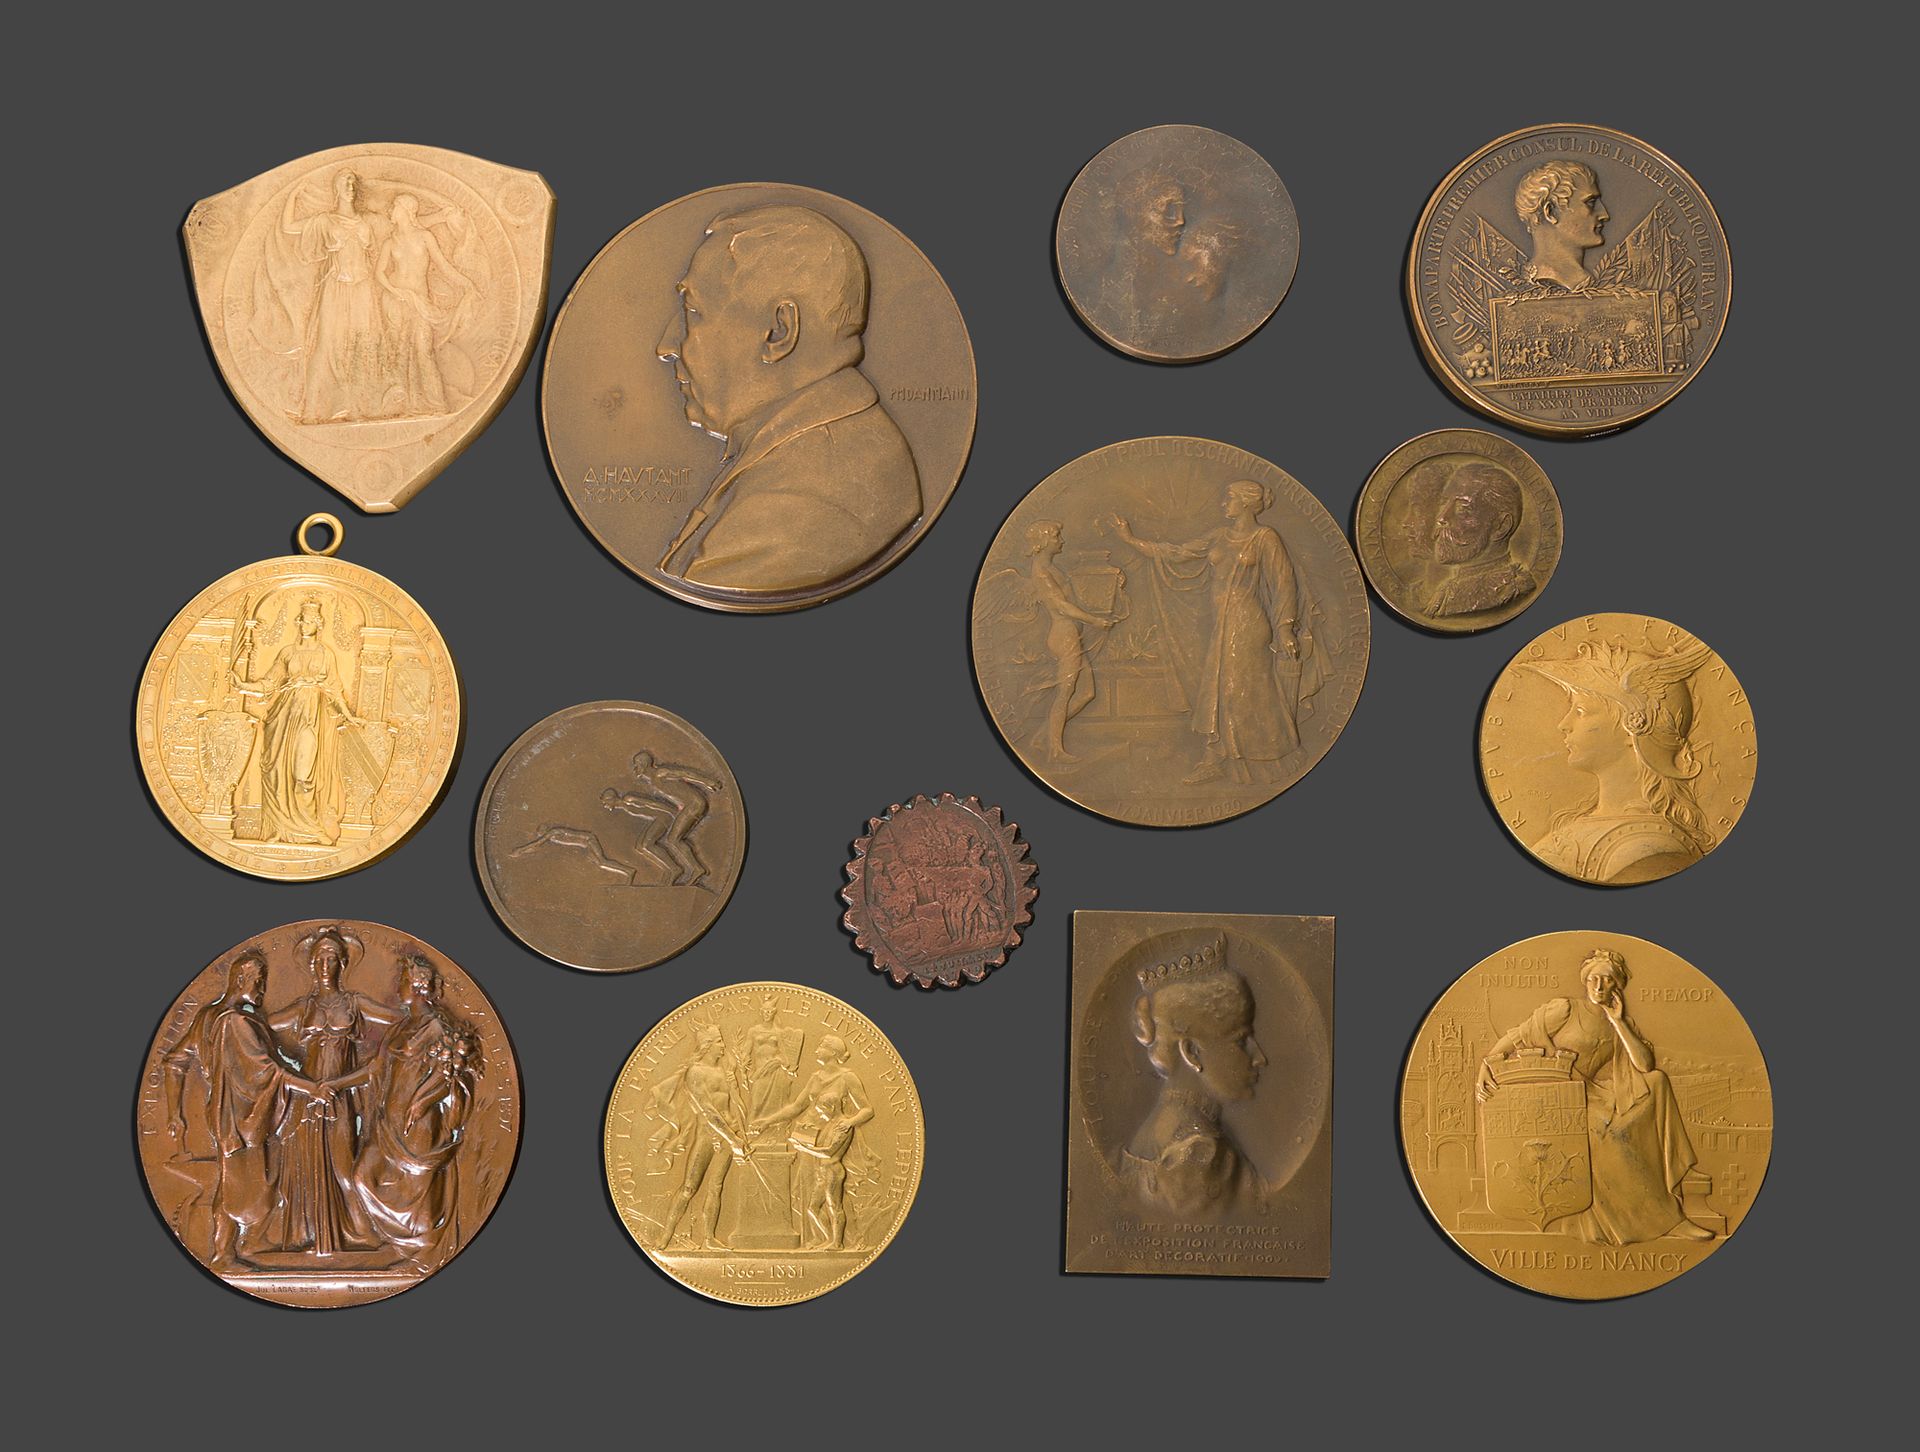 Null 
十四枚镀金或抛光的青铜奖章，包括路易斯安那1904年、南希1909年、布鲁塞尔1897年、德皇威亨1877年